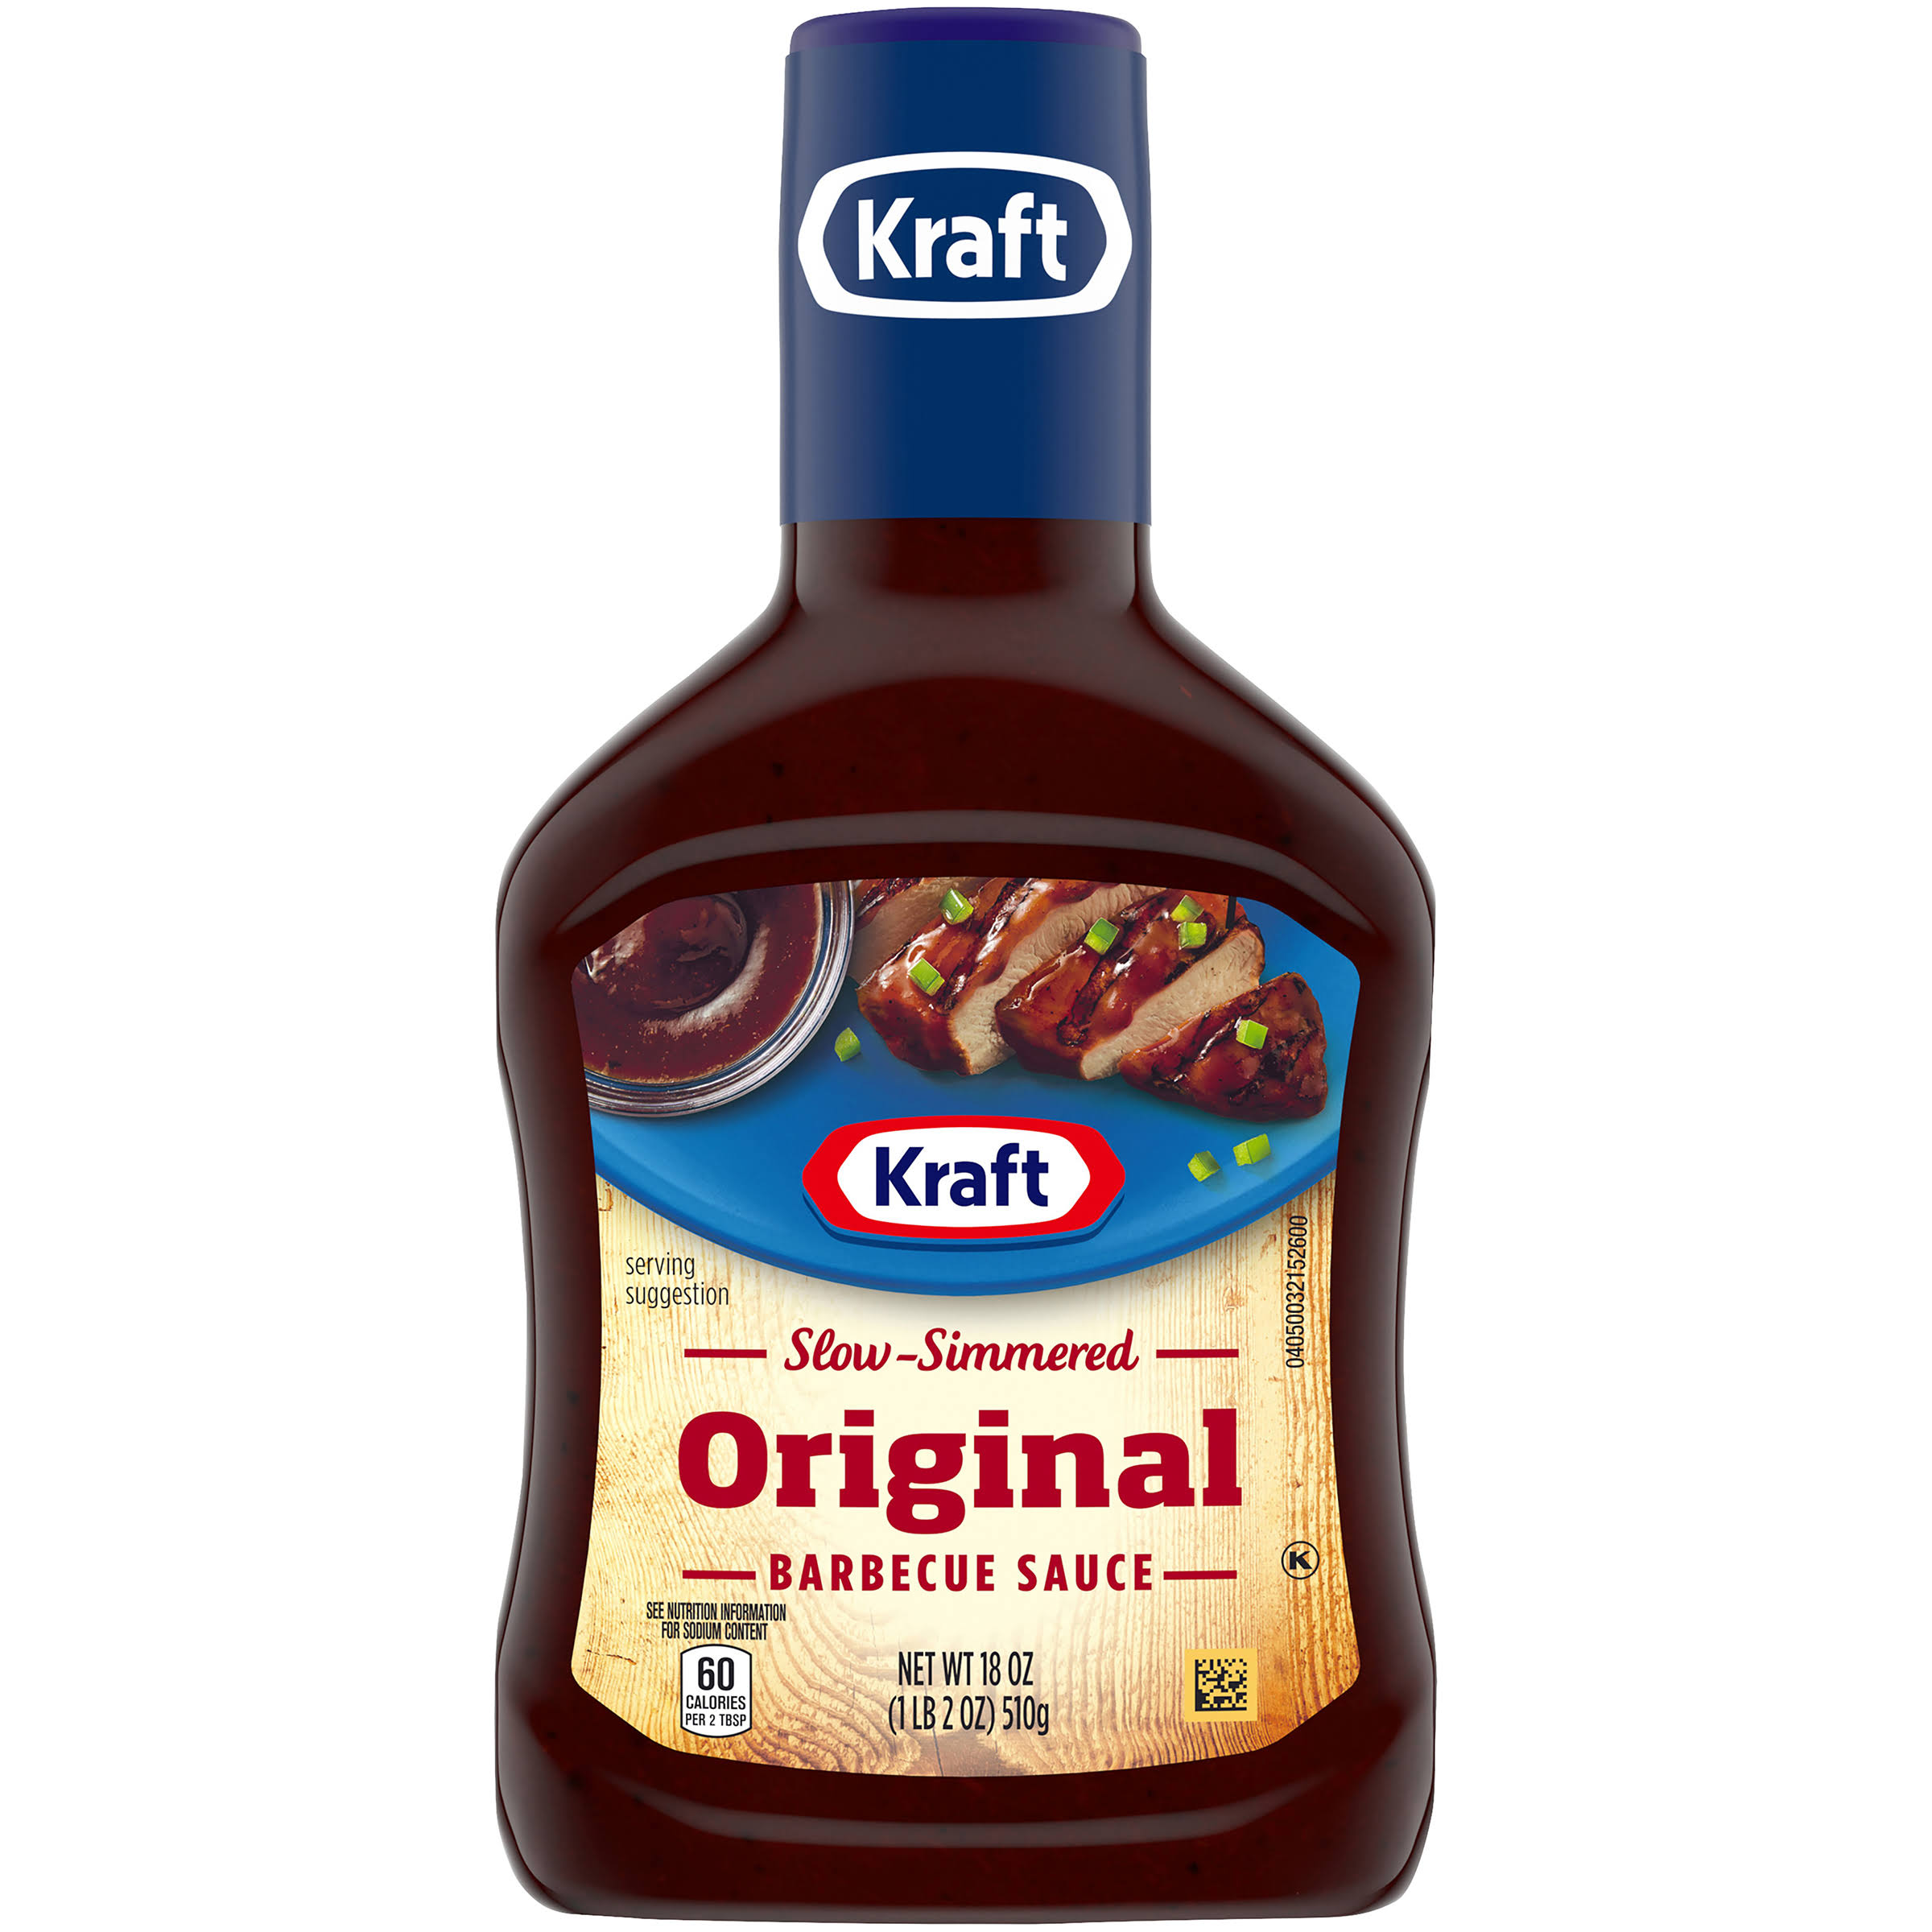 Kraft Barbecue Sauce Slow-Simmered Sauce - Original, 18oz